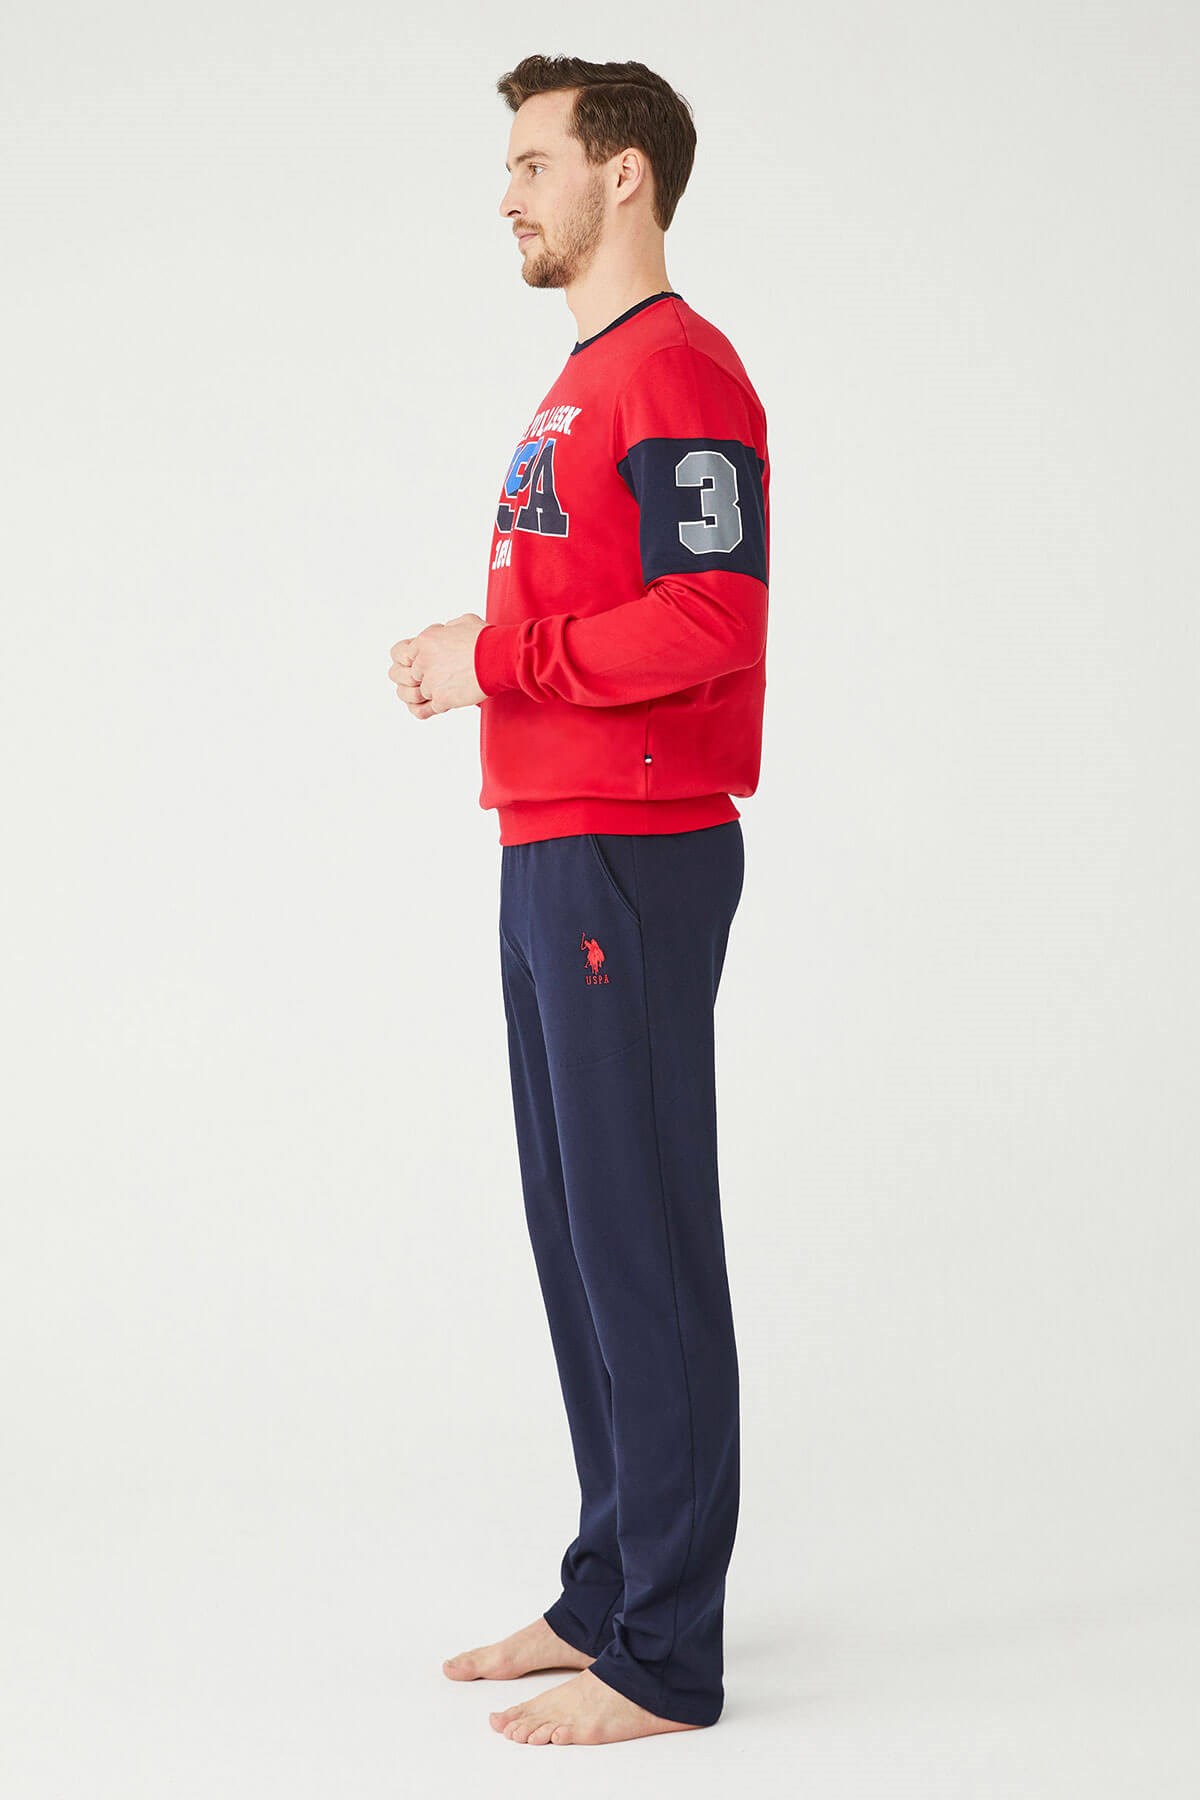 U.S. Polo Assn. Erkek Kırmızı Pijama Takımı | Modcollection.com.tr